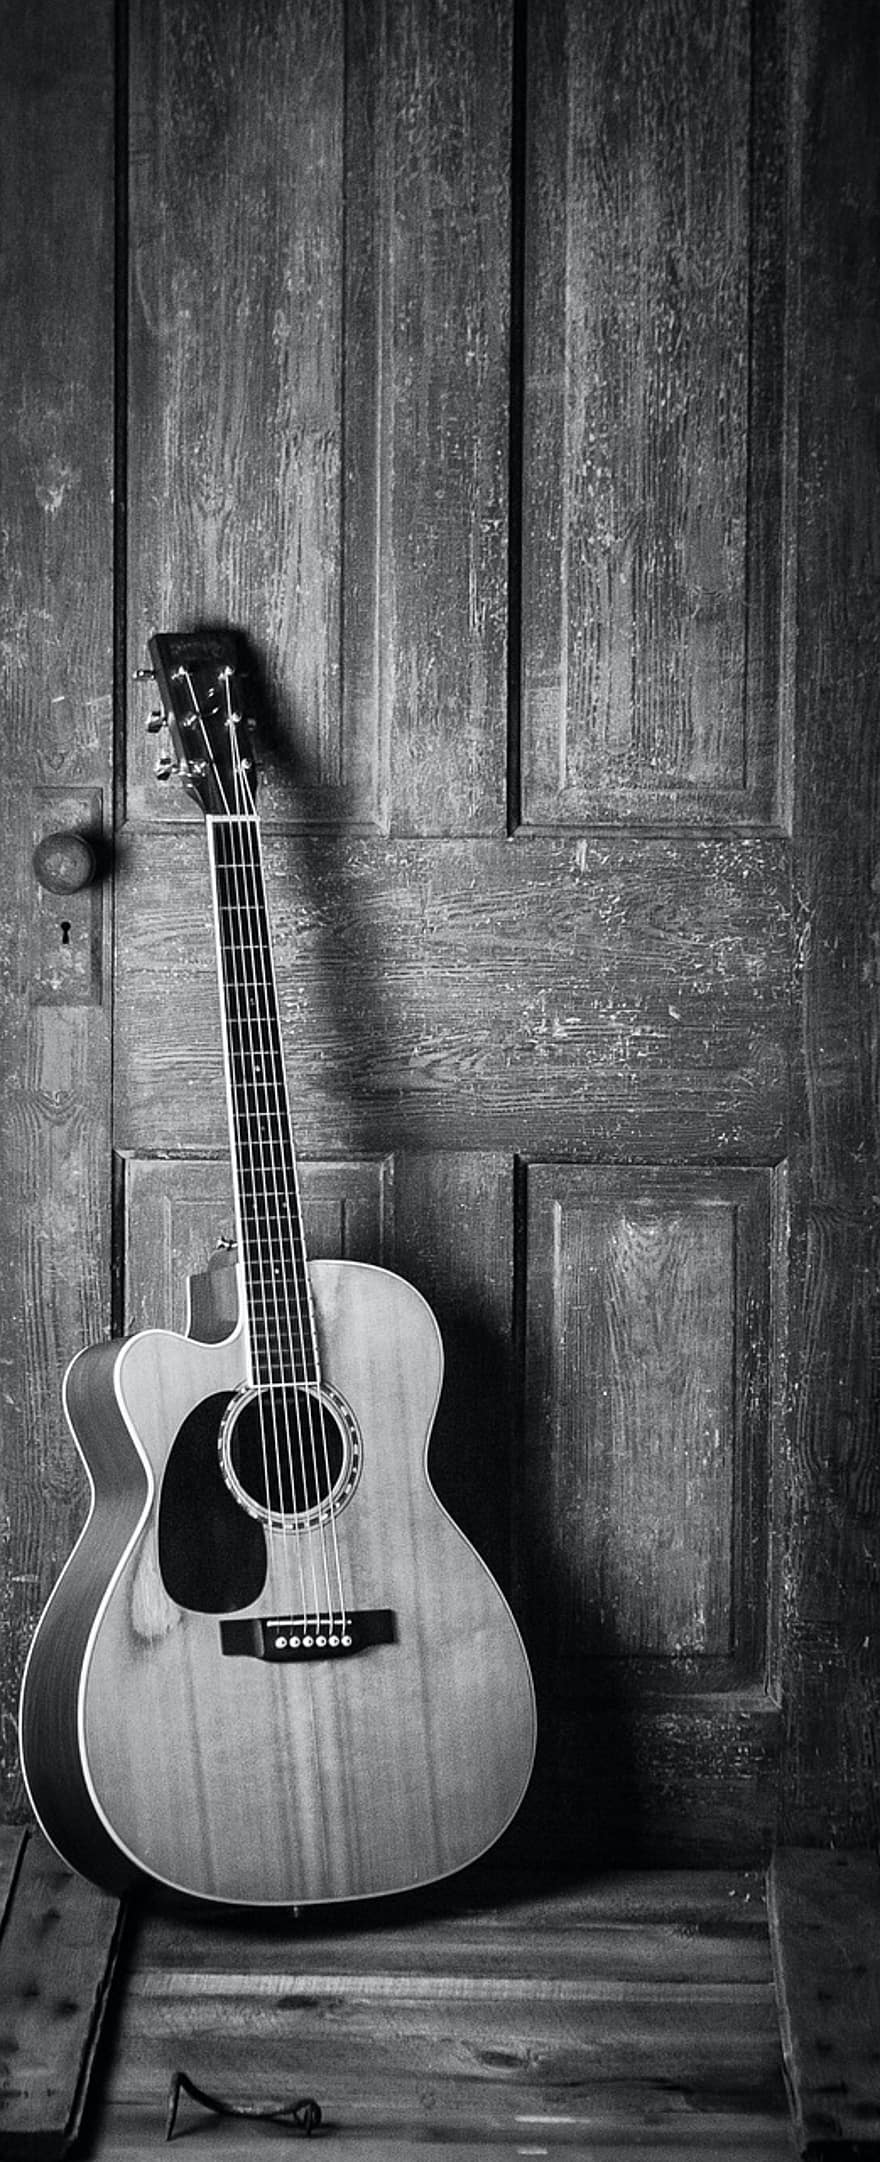 Music, Guitar, Instrument, Door, Peace, Acoustic, wood, musical instrument, acoustic guitar, close-up, fretboard